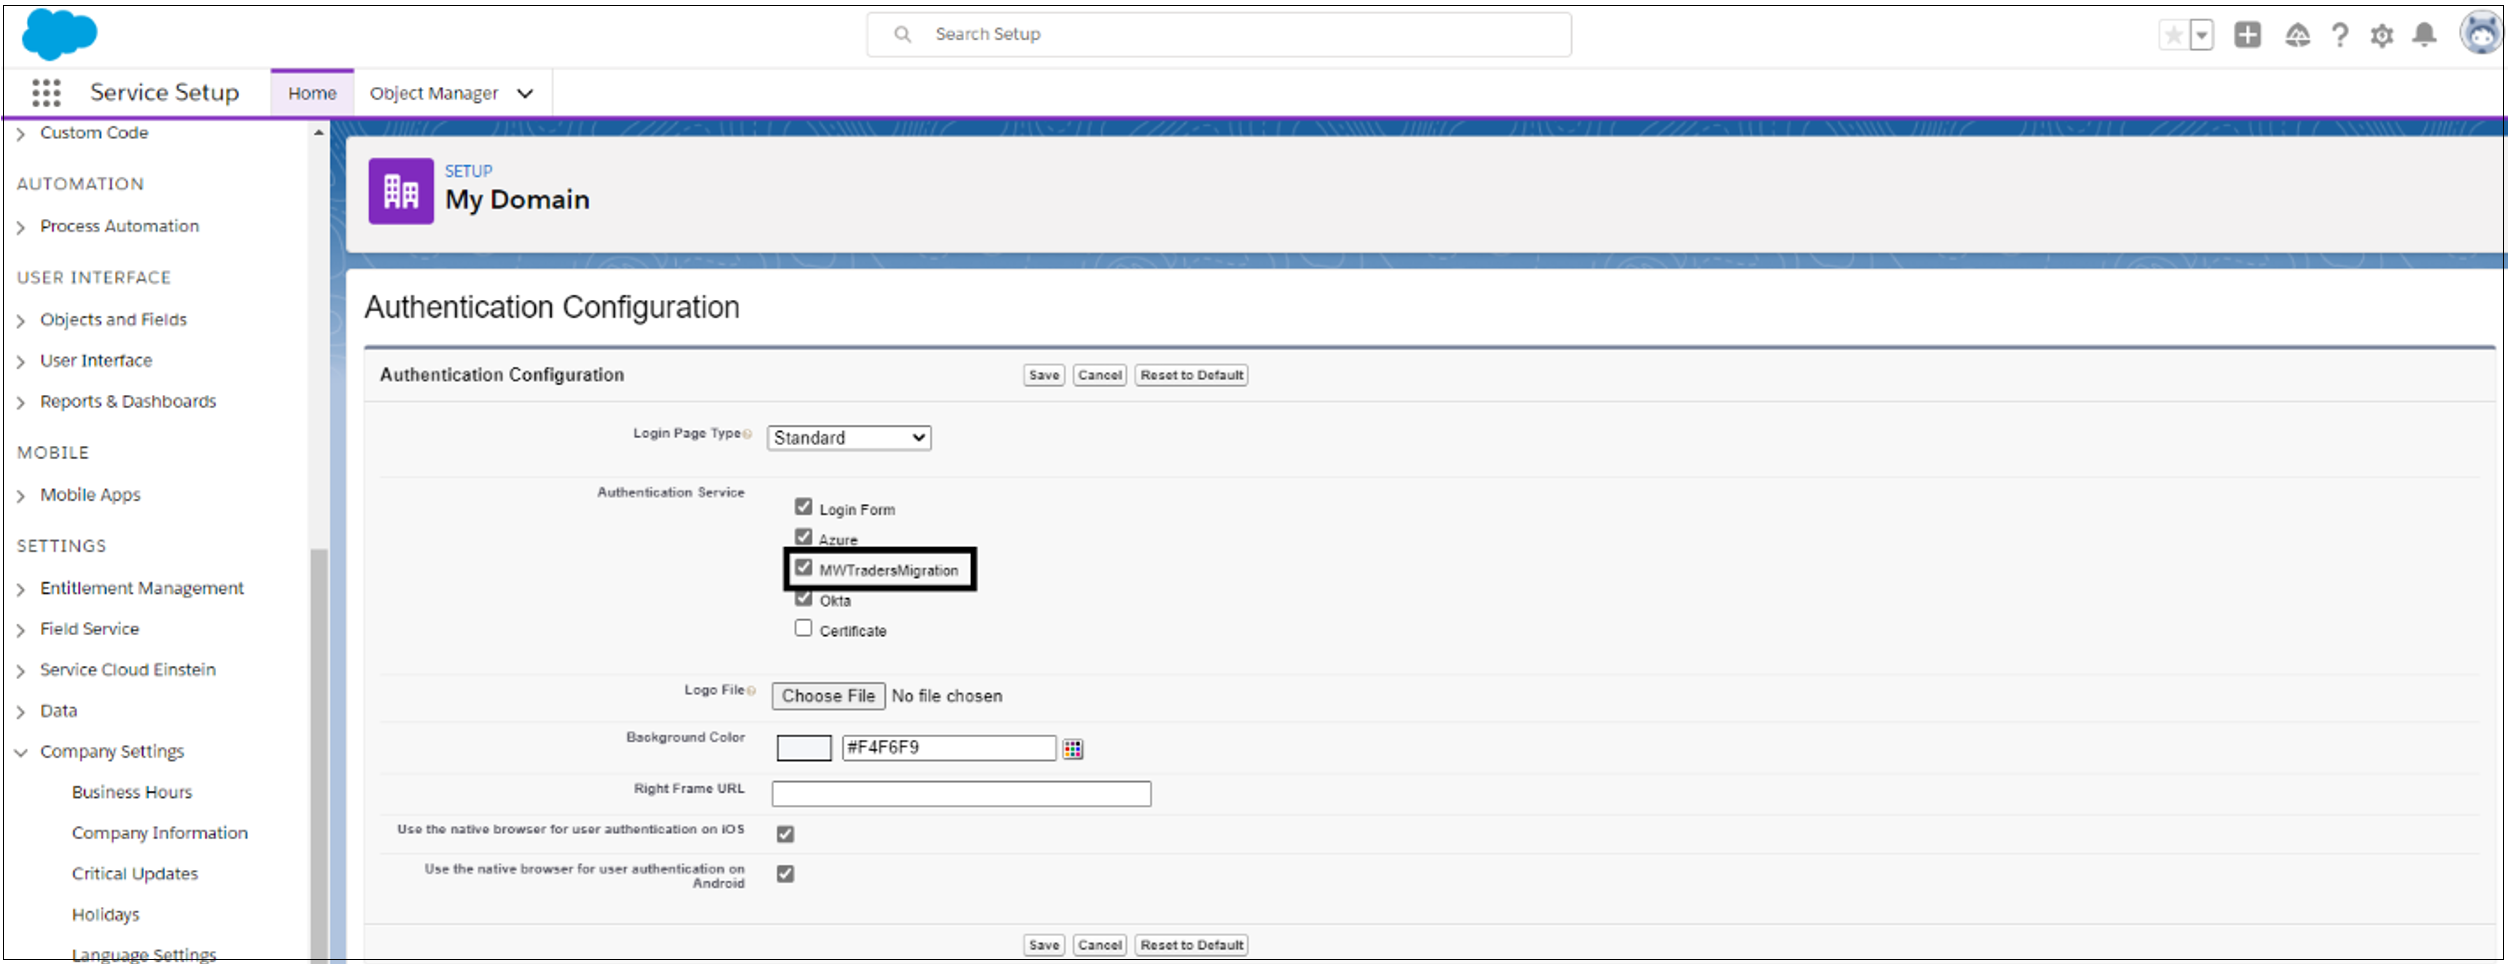 Screenshot of Authentication Service options under Authentication Configuration.